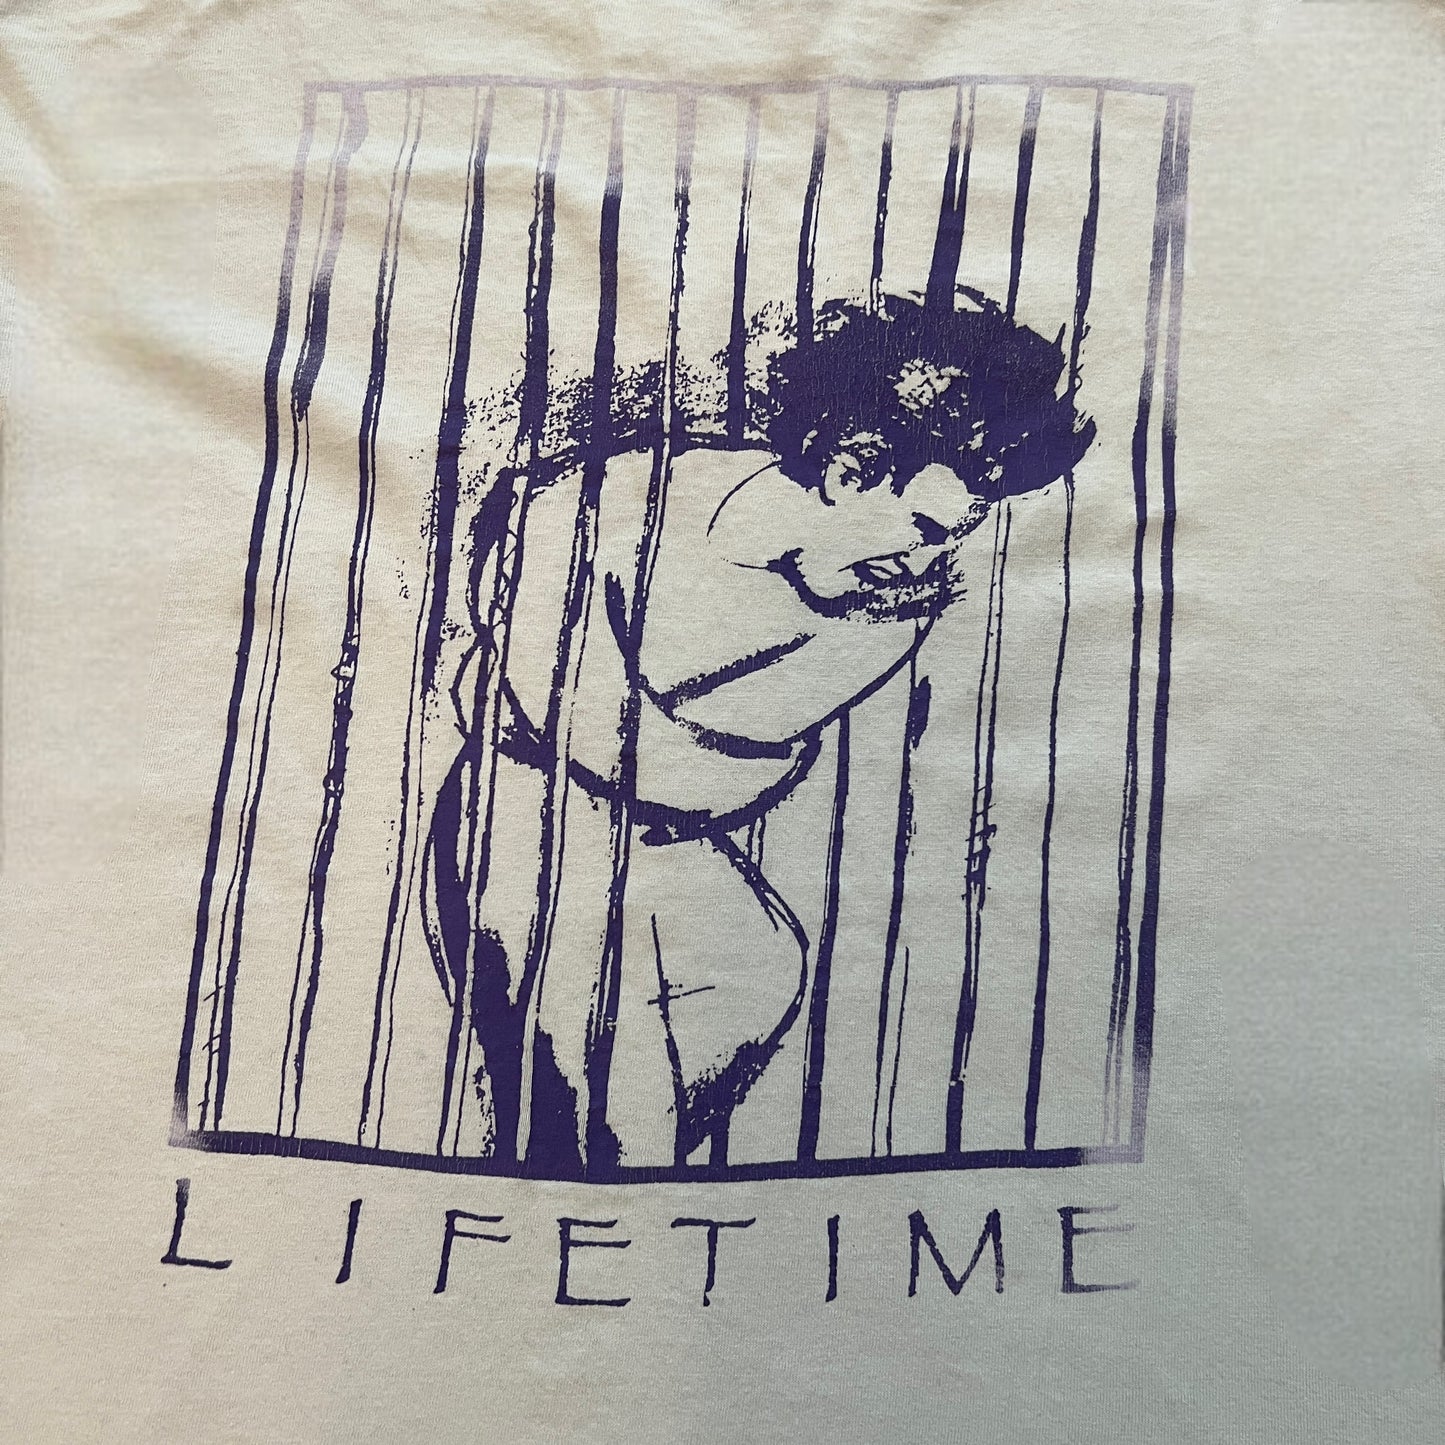 Lifetime Band Dwell 1991 Vintage T-Shirt Size XL Single Stitch Hardcore